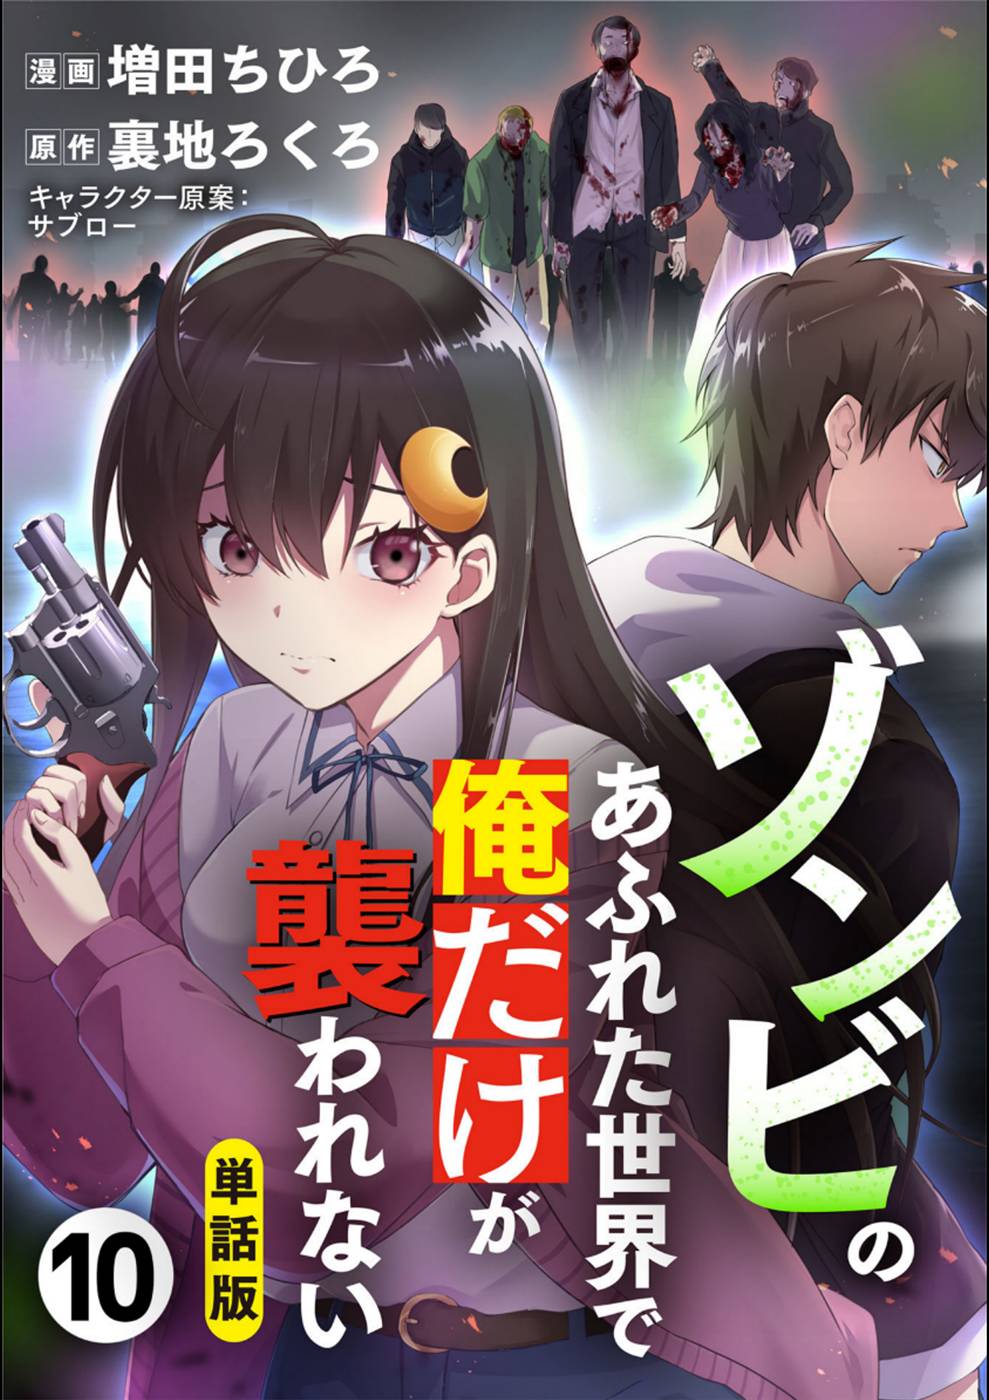 Read Kore Wa Zombie Desu Ka Chapter 10 - MangaFreak